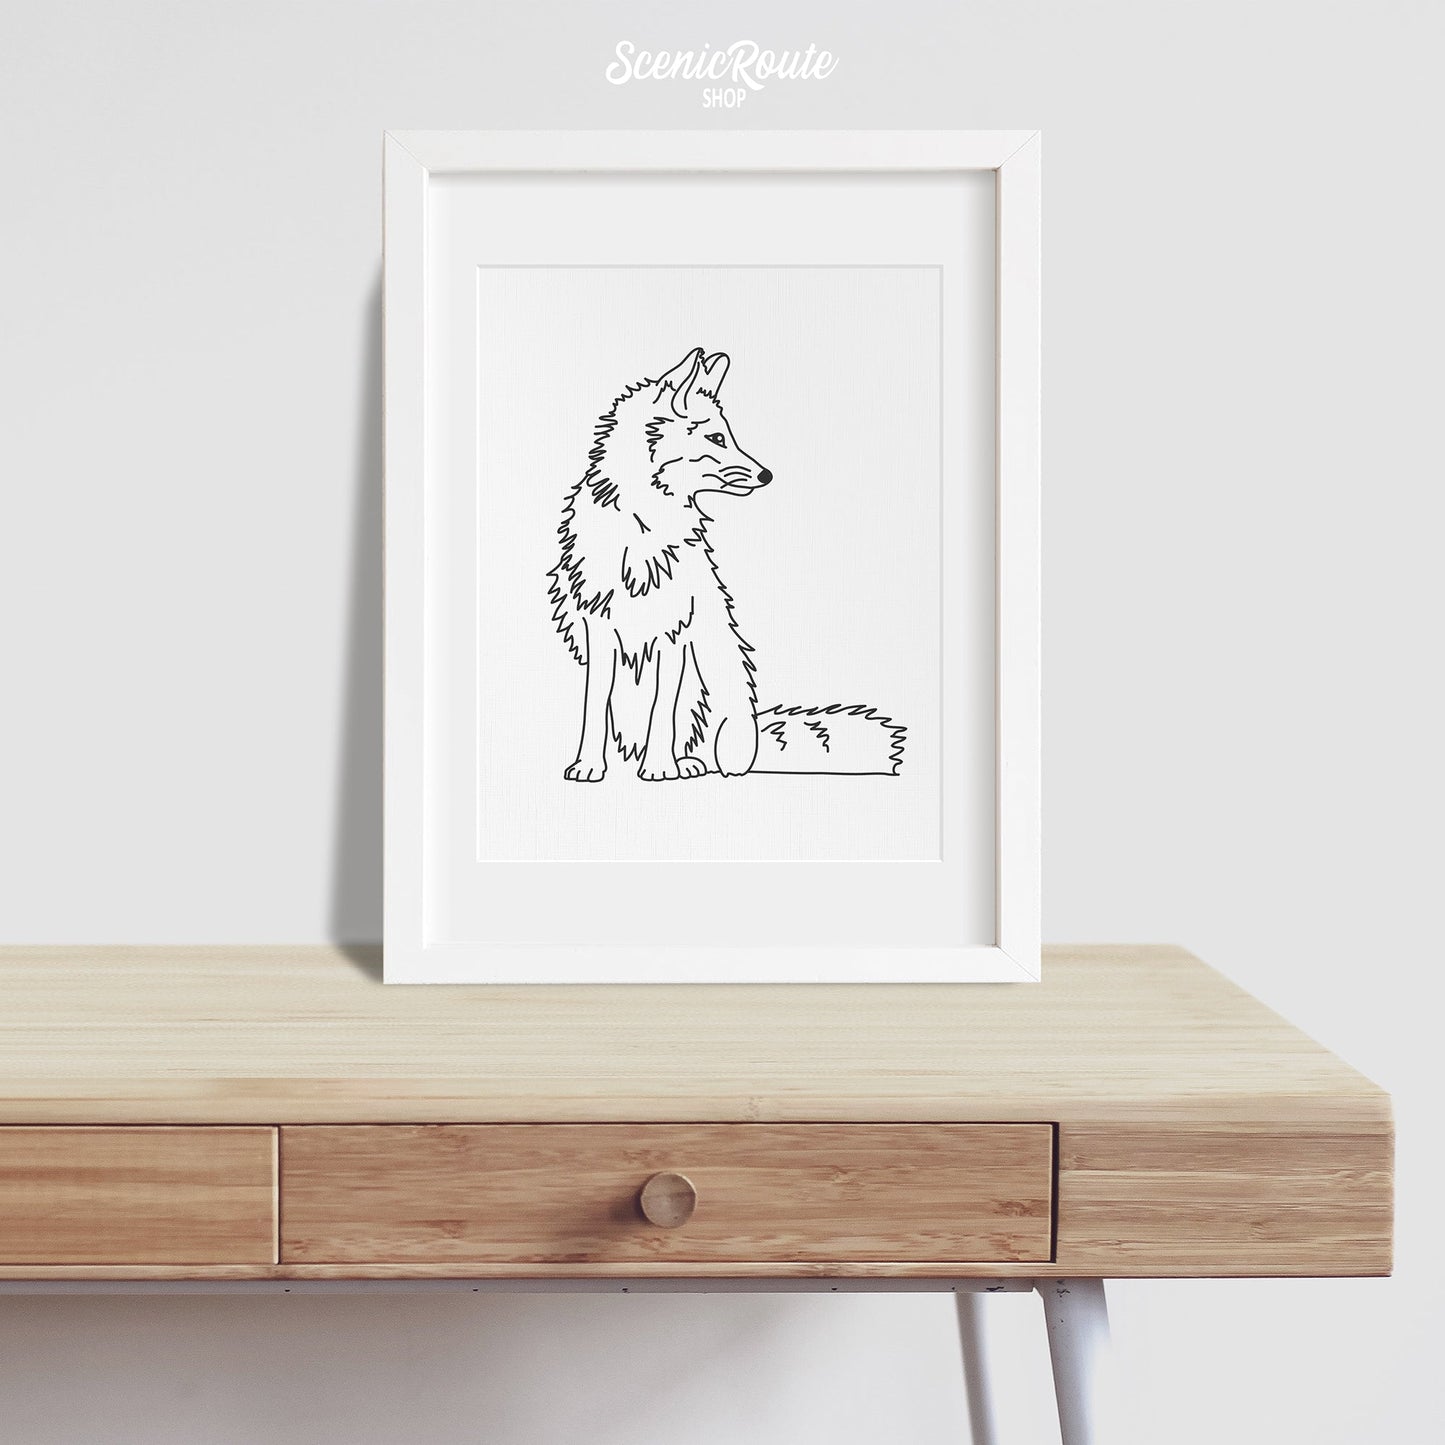 A framed line art drawing of a Fox on a desk